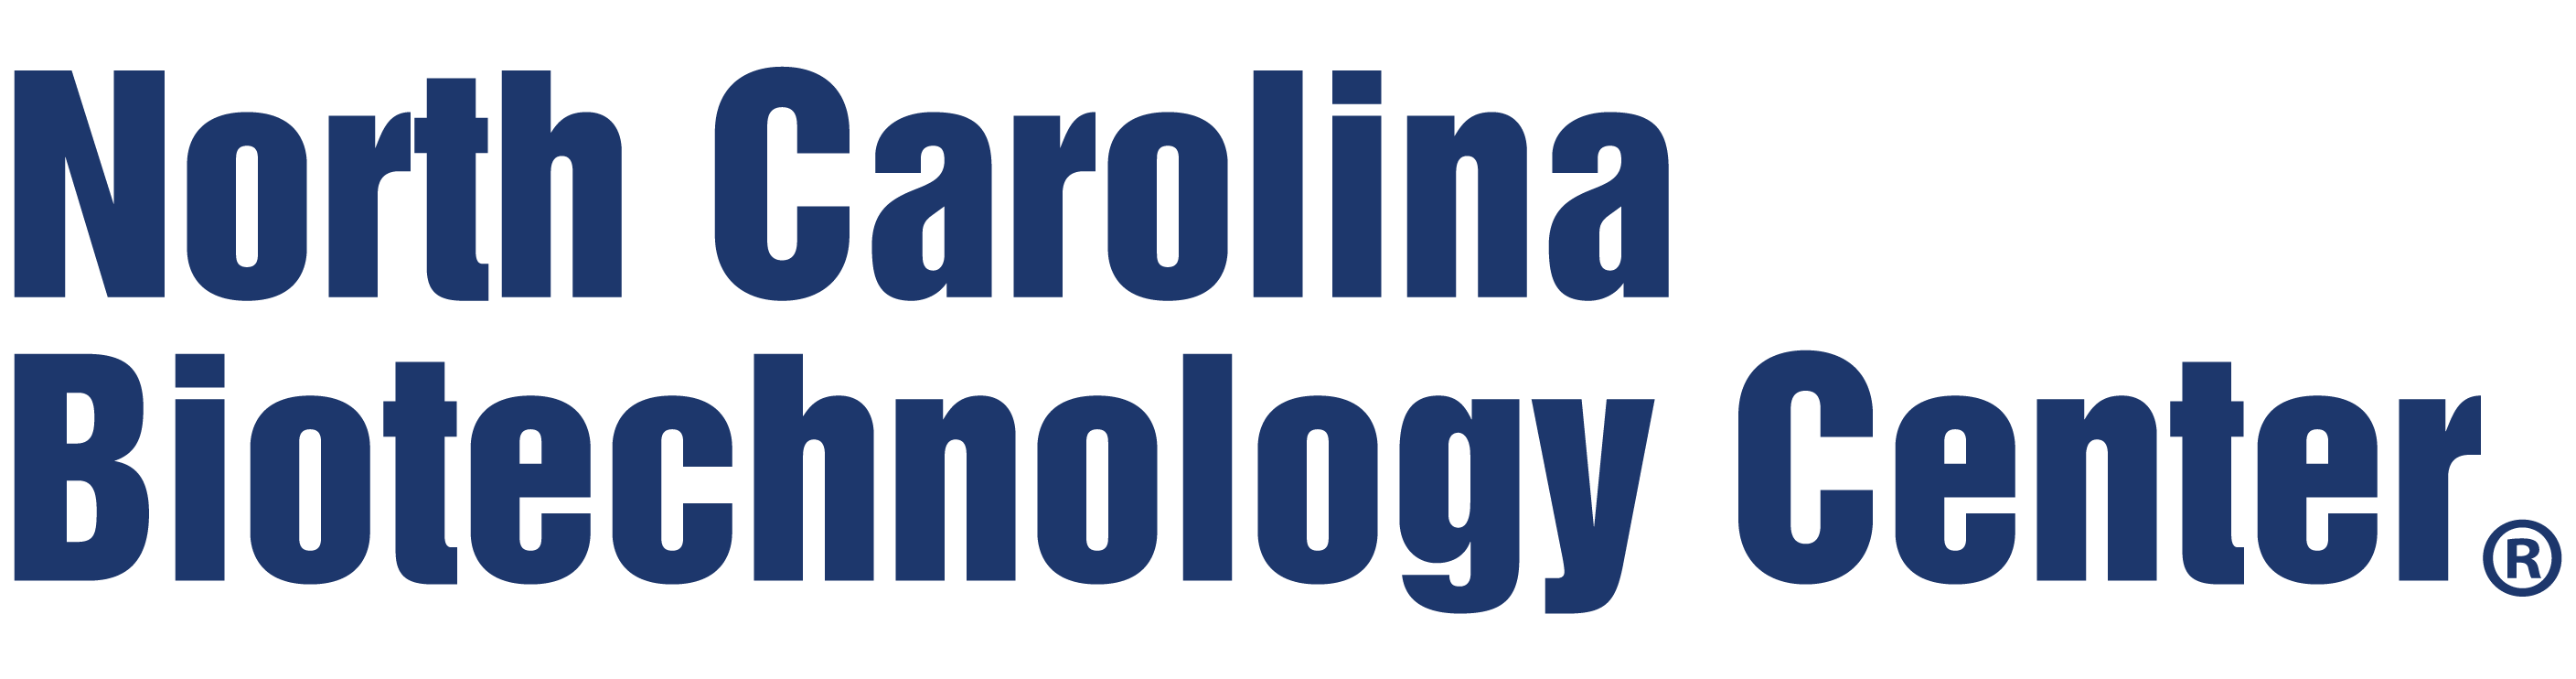 NCBiotech Logos and Images | North Carolina Biotechnology Center